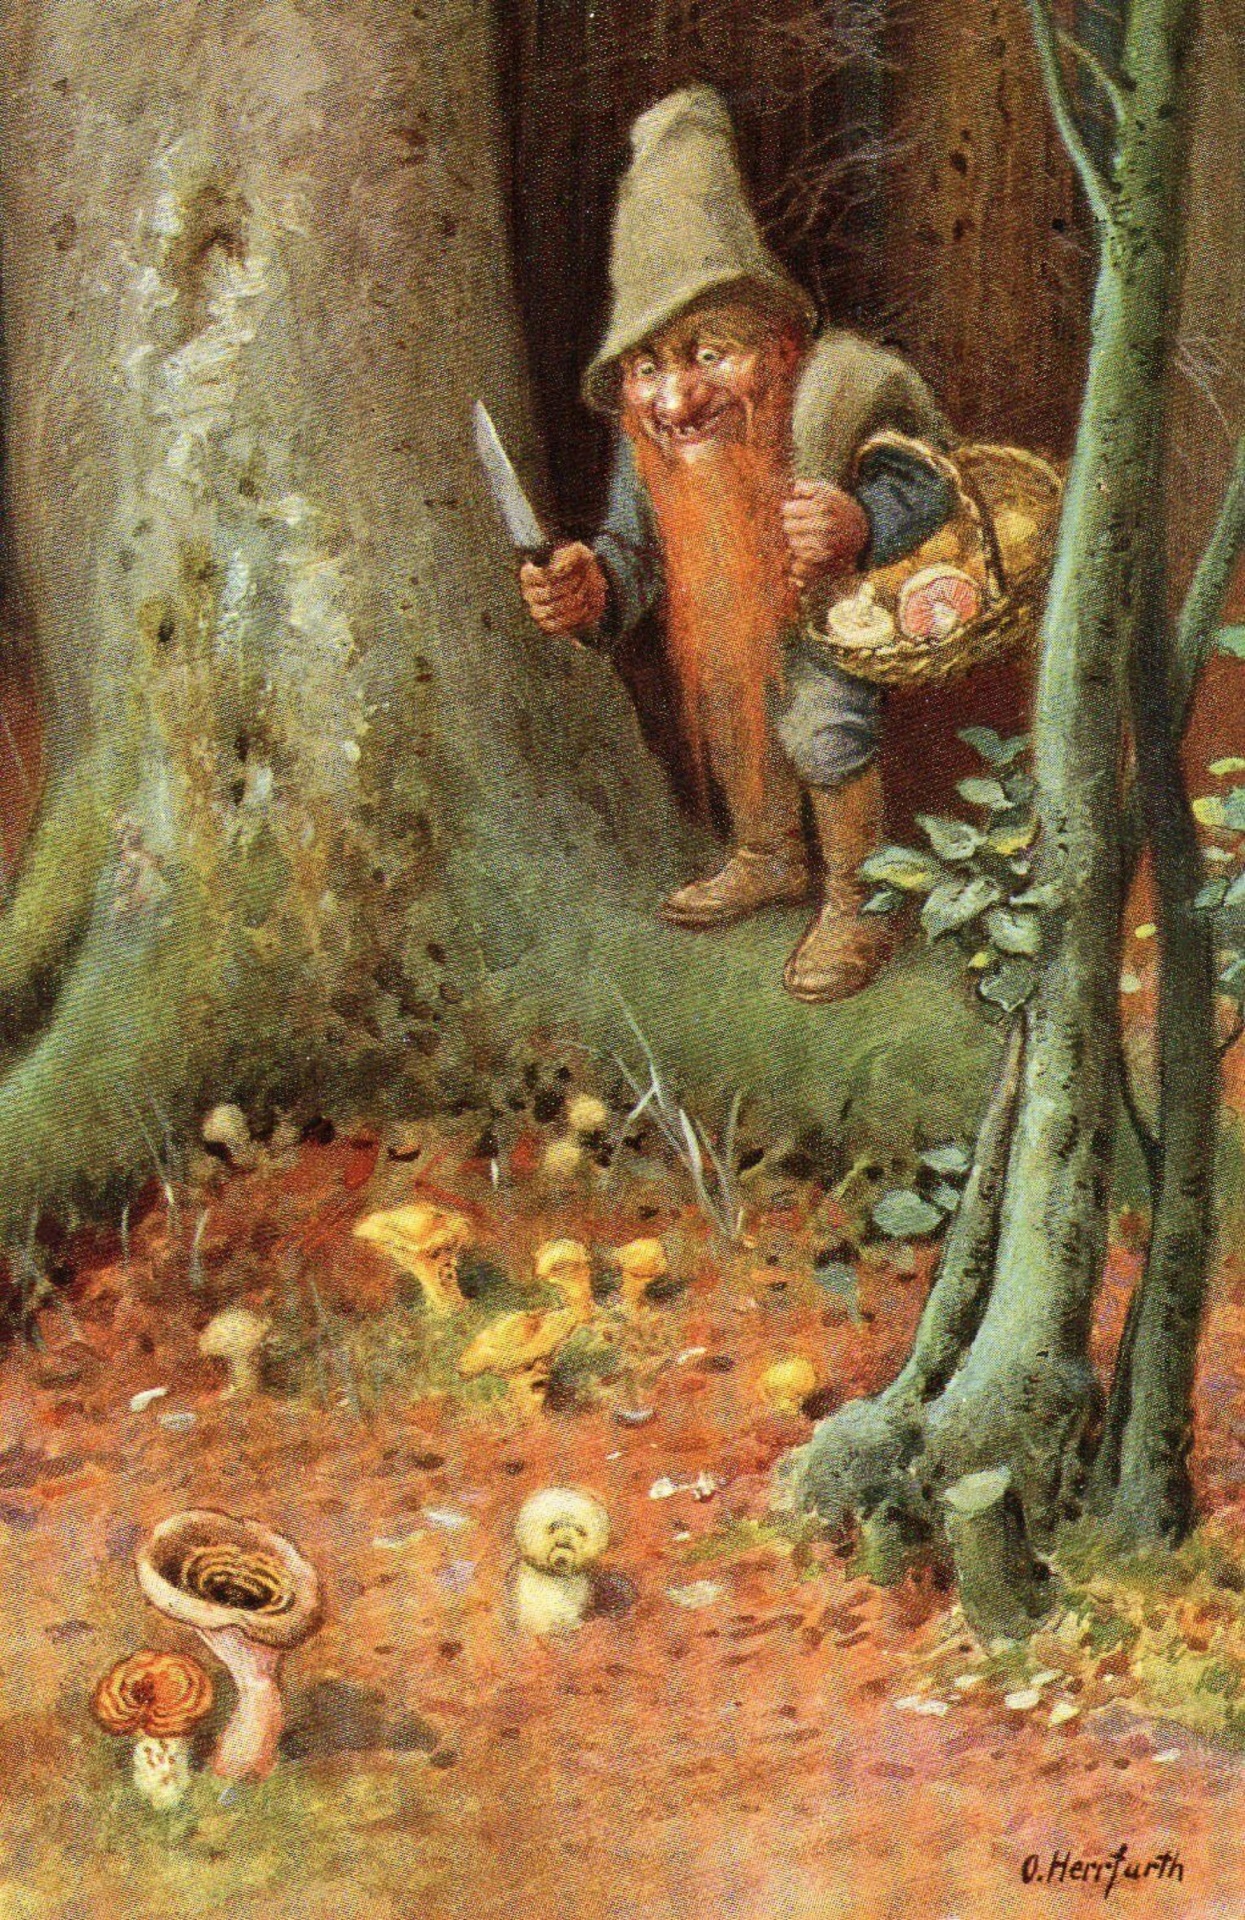 Troll v podzimní houby lesa